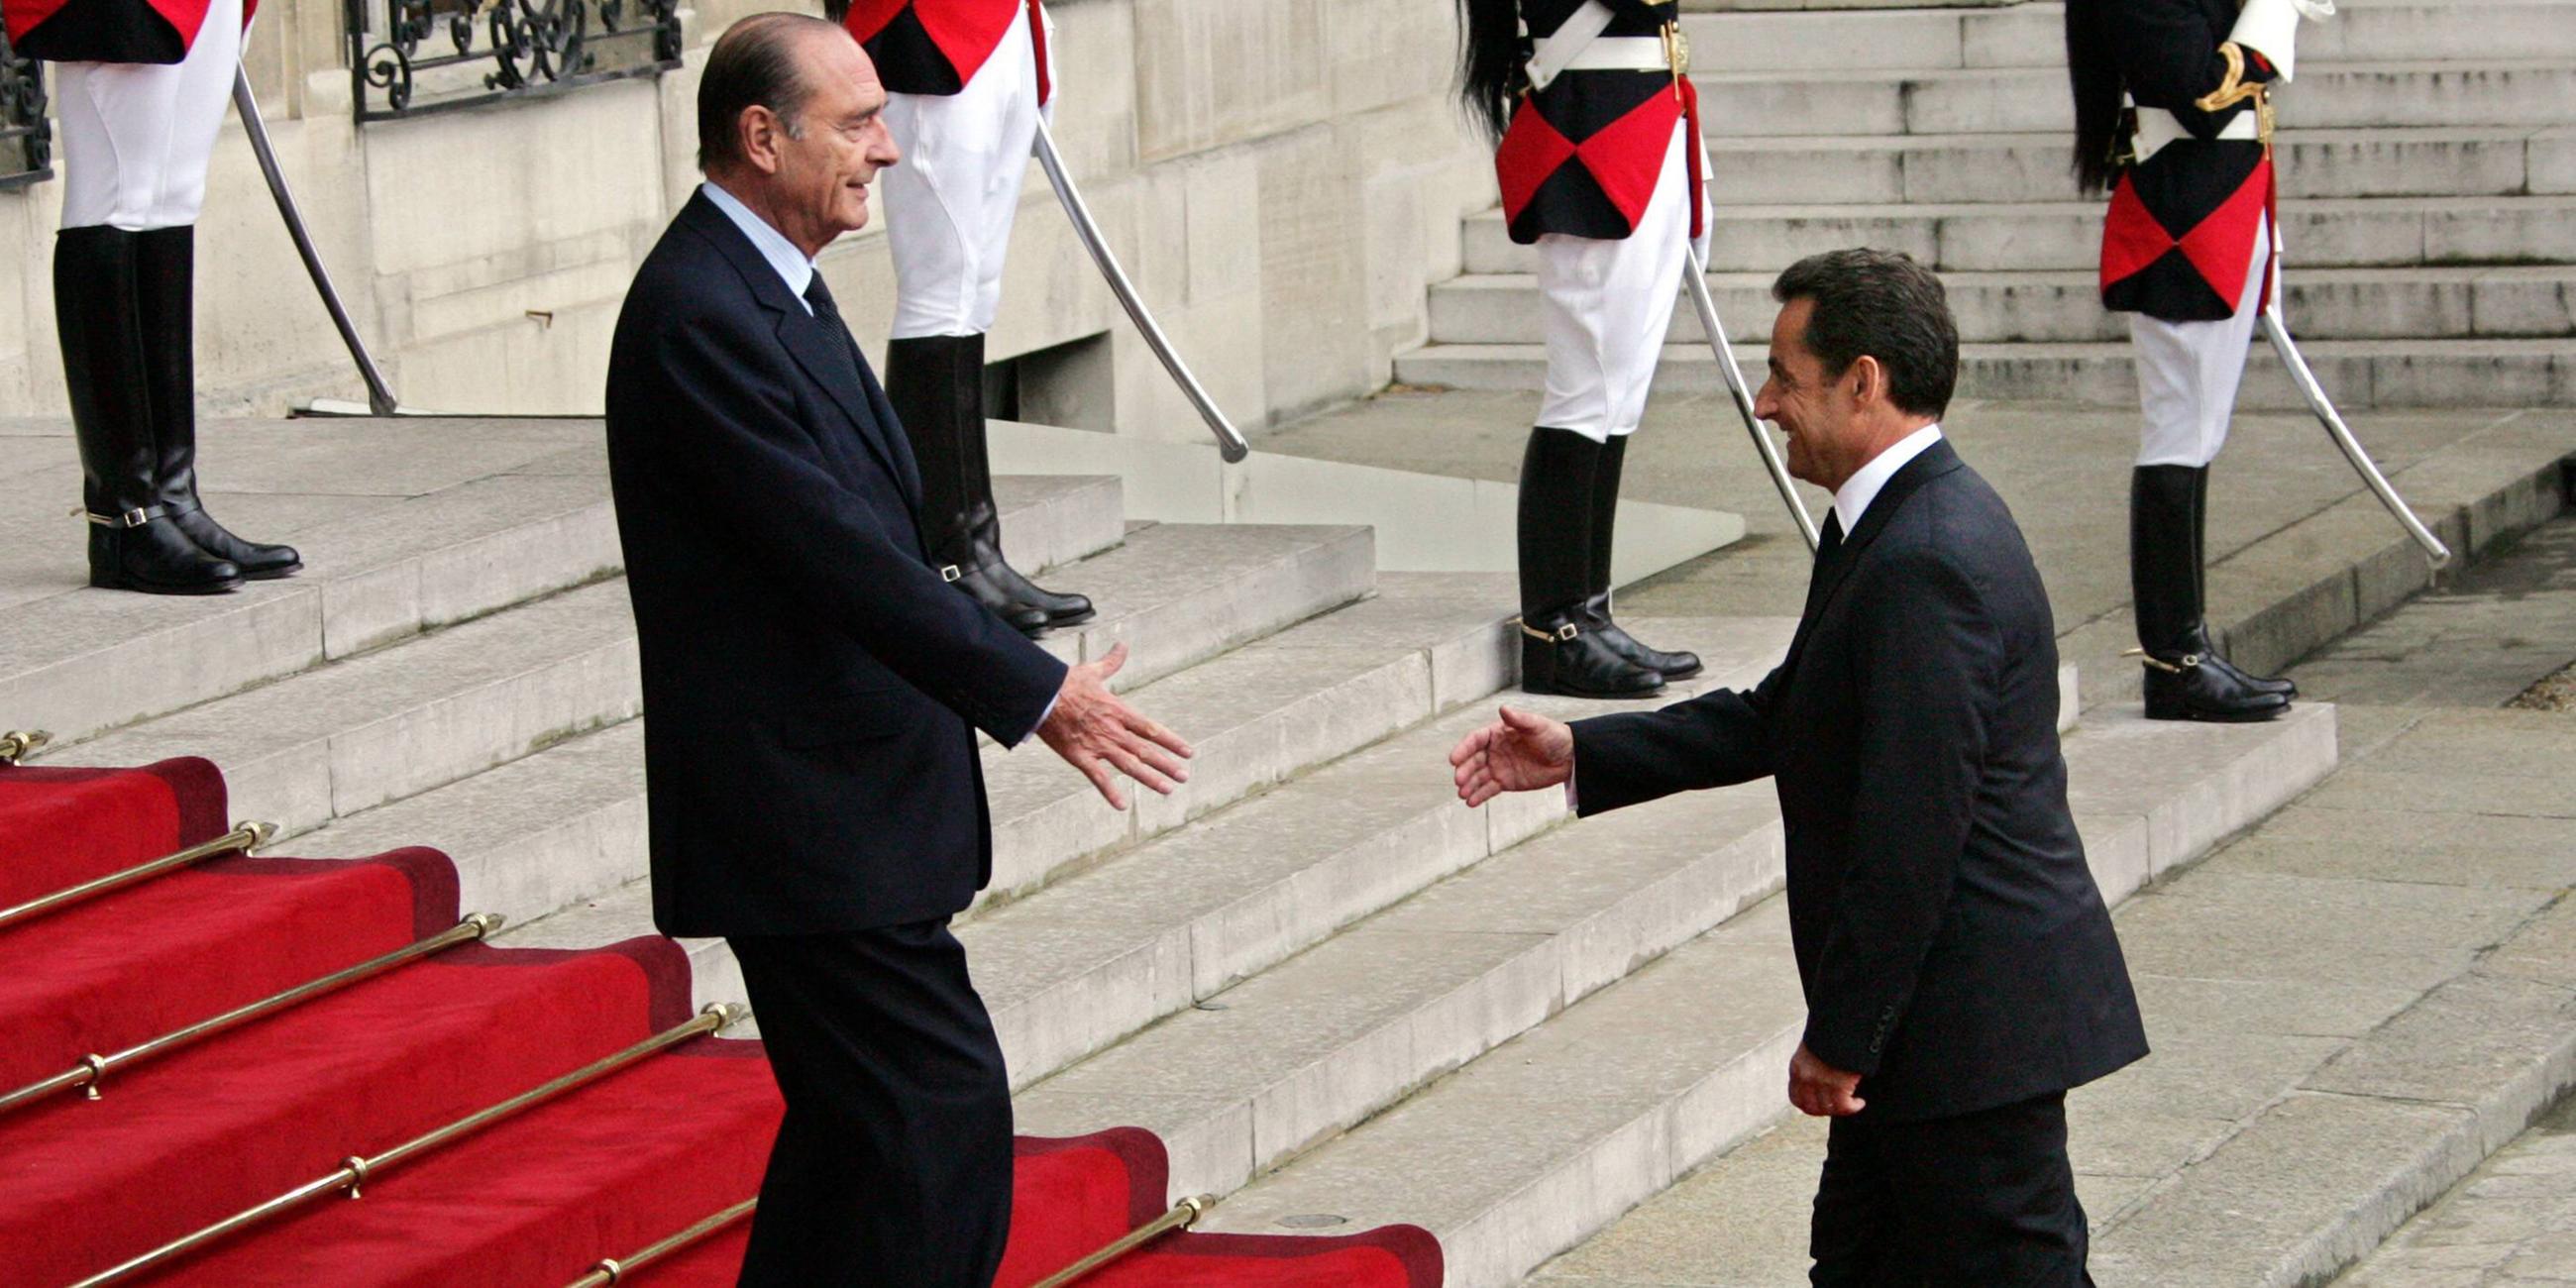 Archiv: Jacques Chirac und Nicolas Sarkozy im Jahre 2007